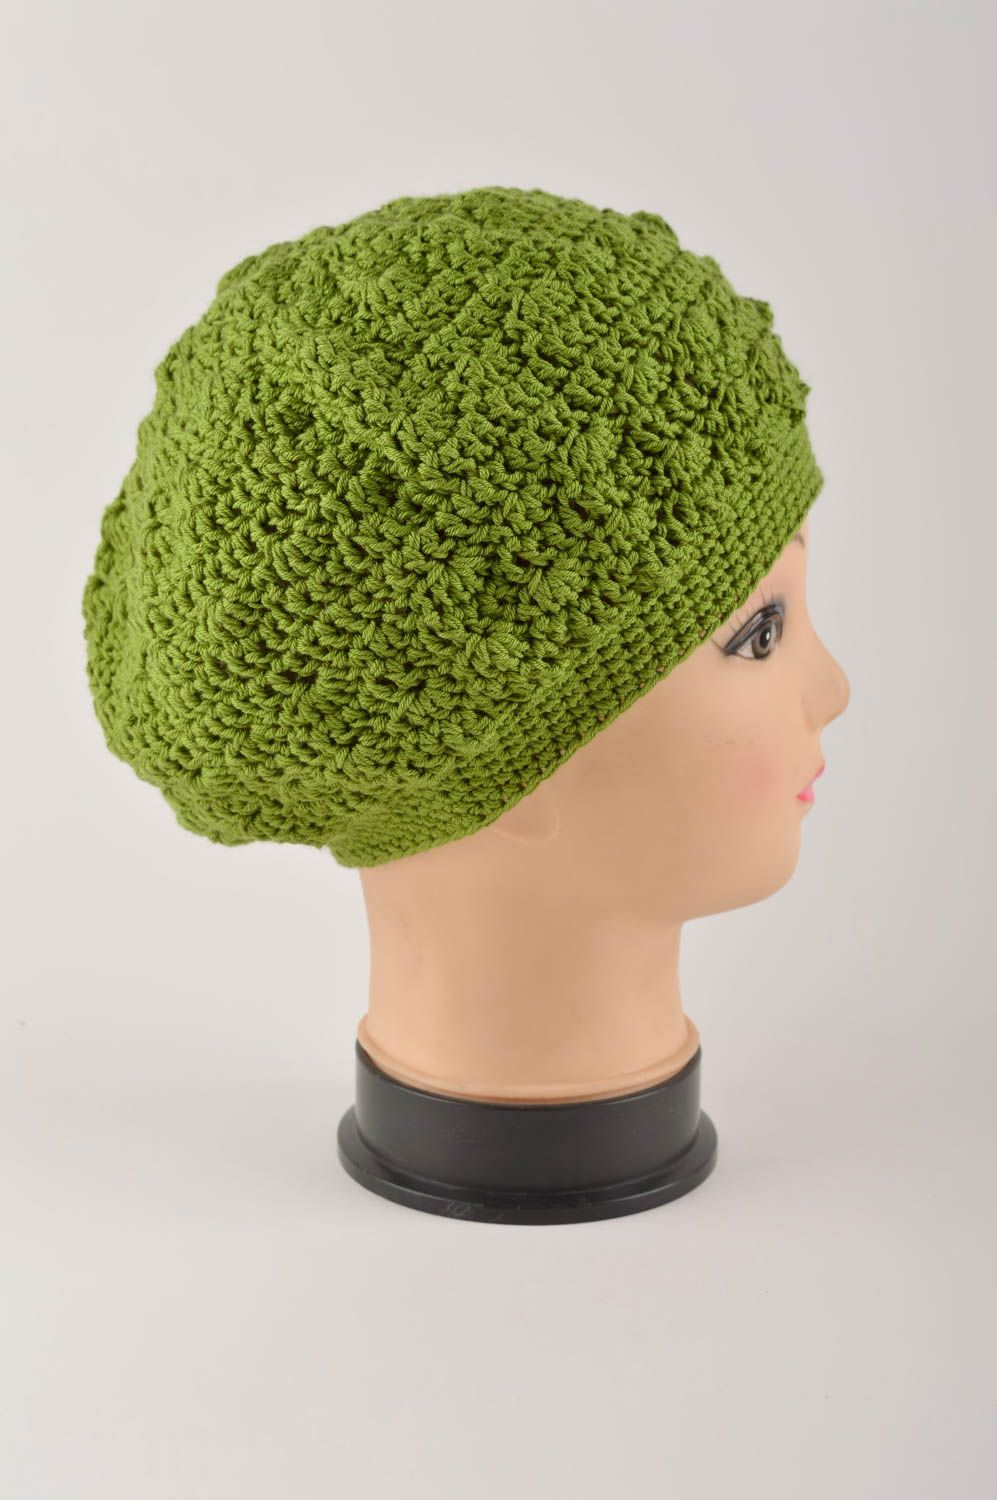 Handmade crochet hat womens hat designer accessories for women gifts for girls photo 4